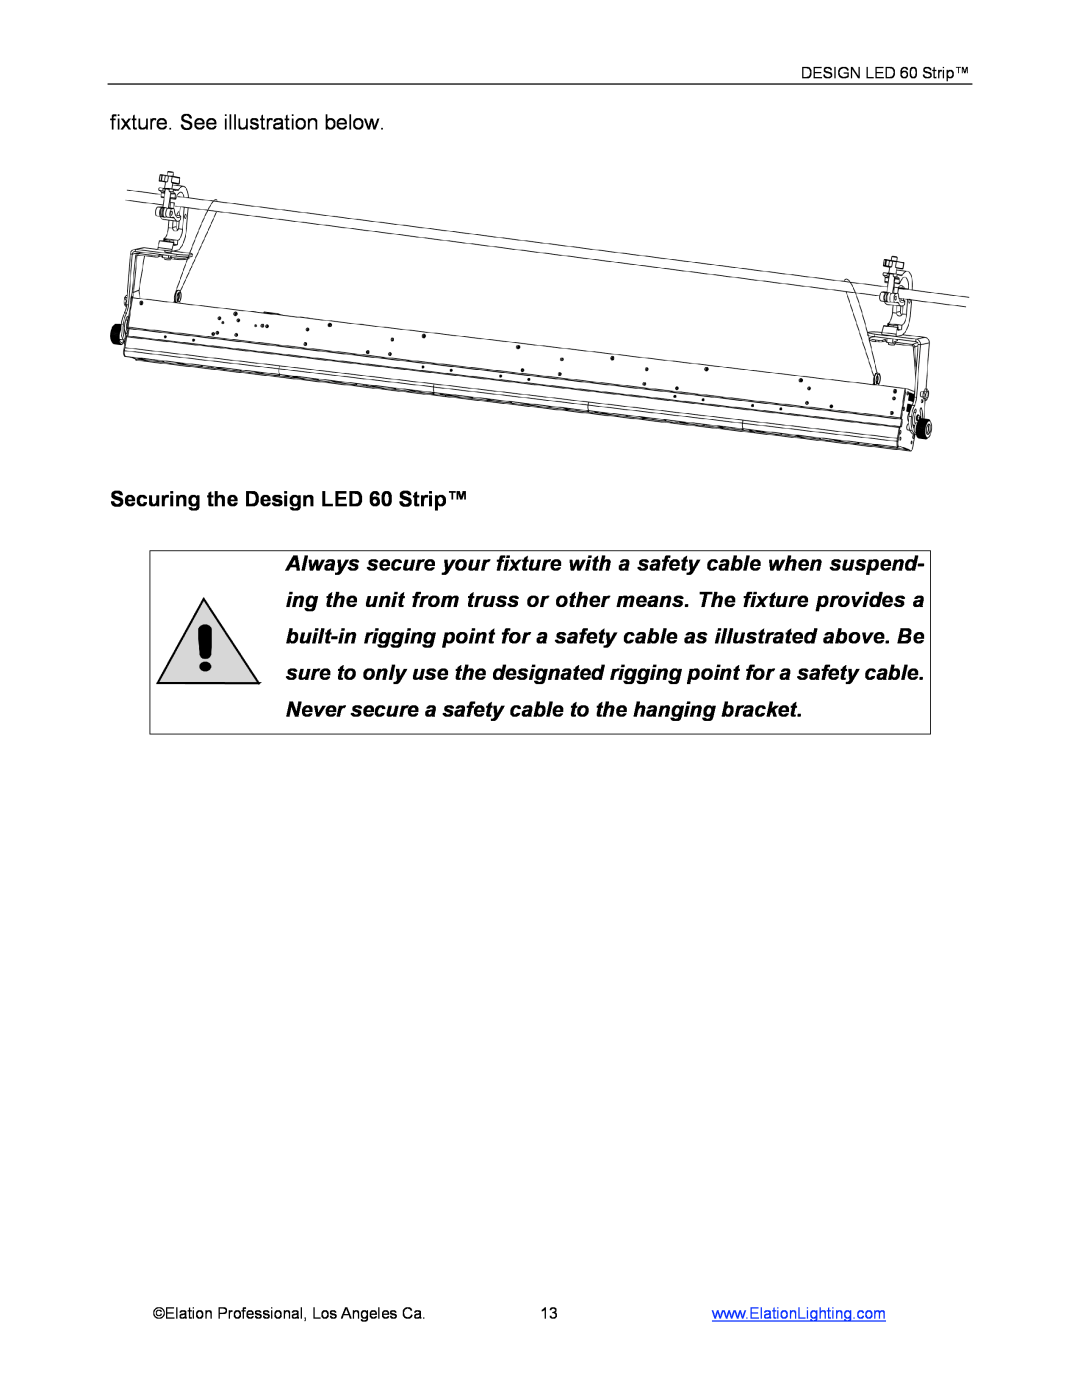 Elation Professional manual Securing the Design LED 60 Strip, fixture. See illustration below 